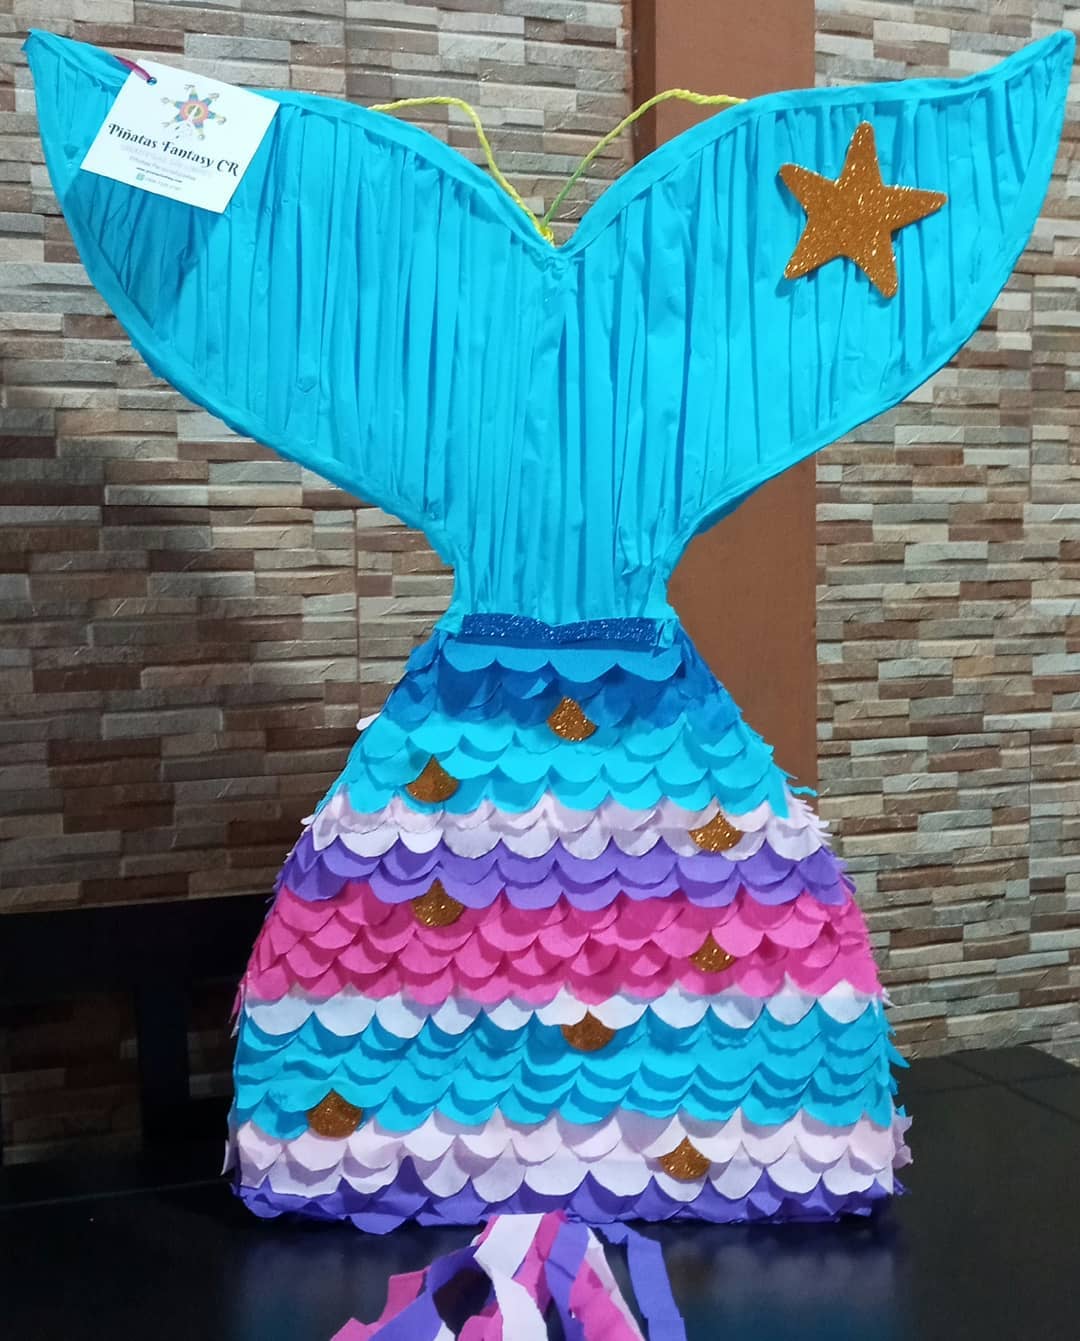 Piñata Sirena